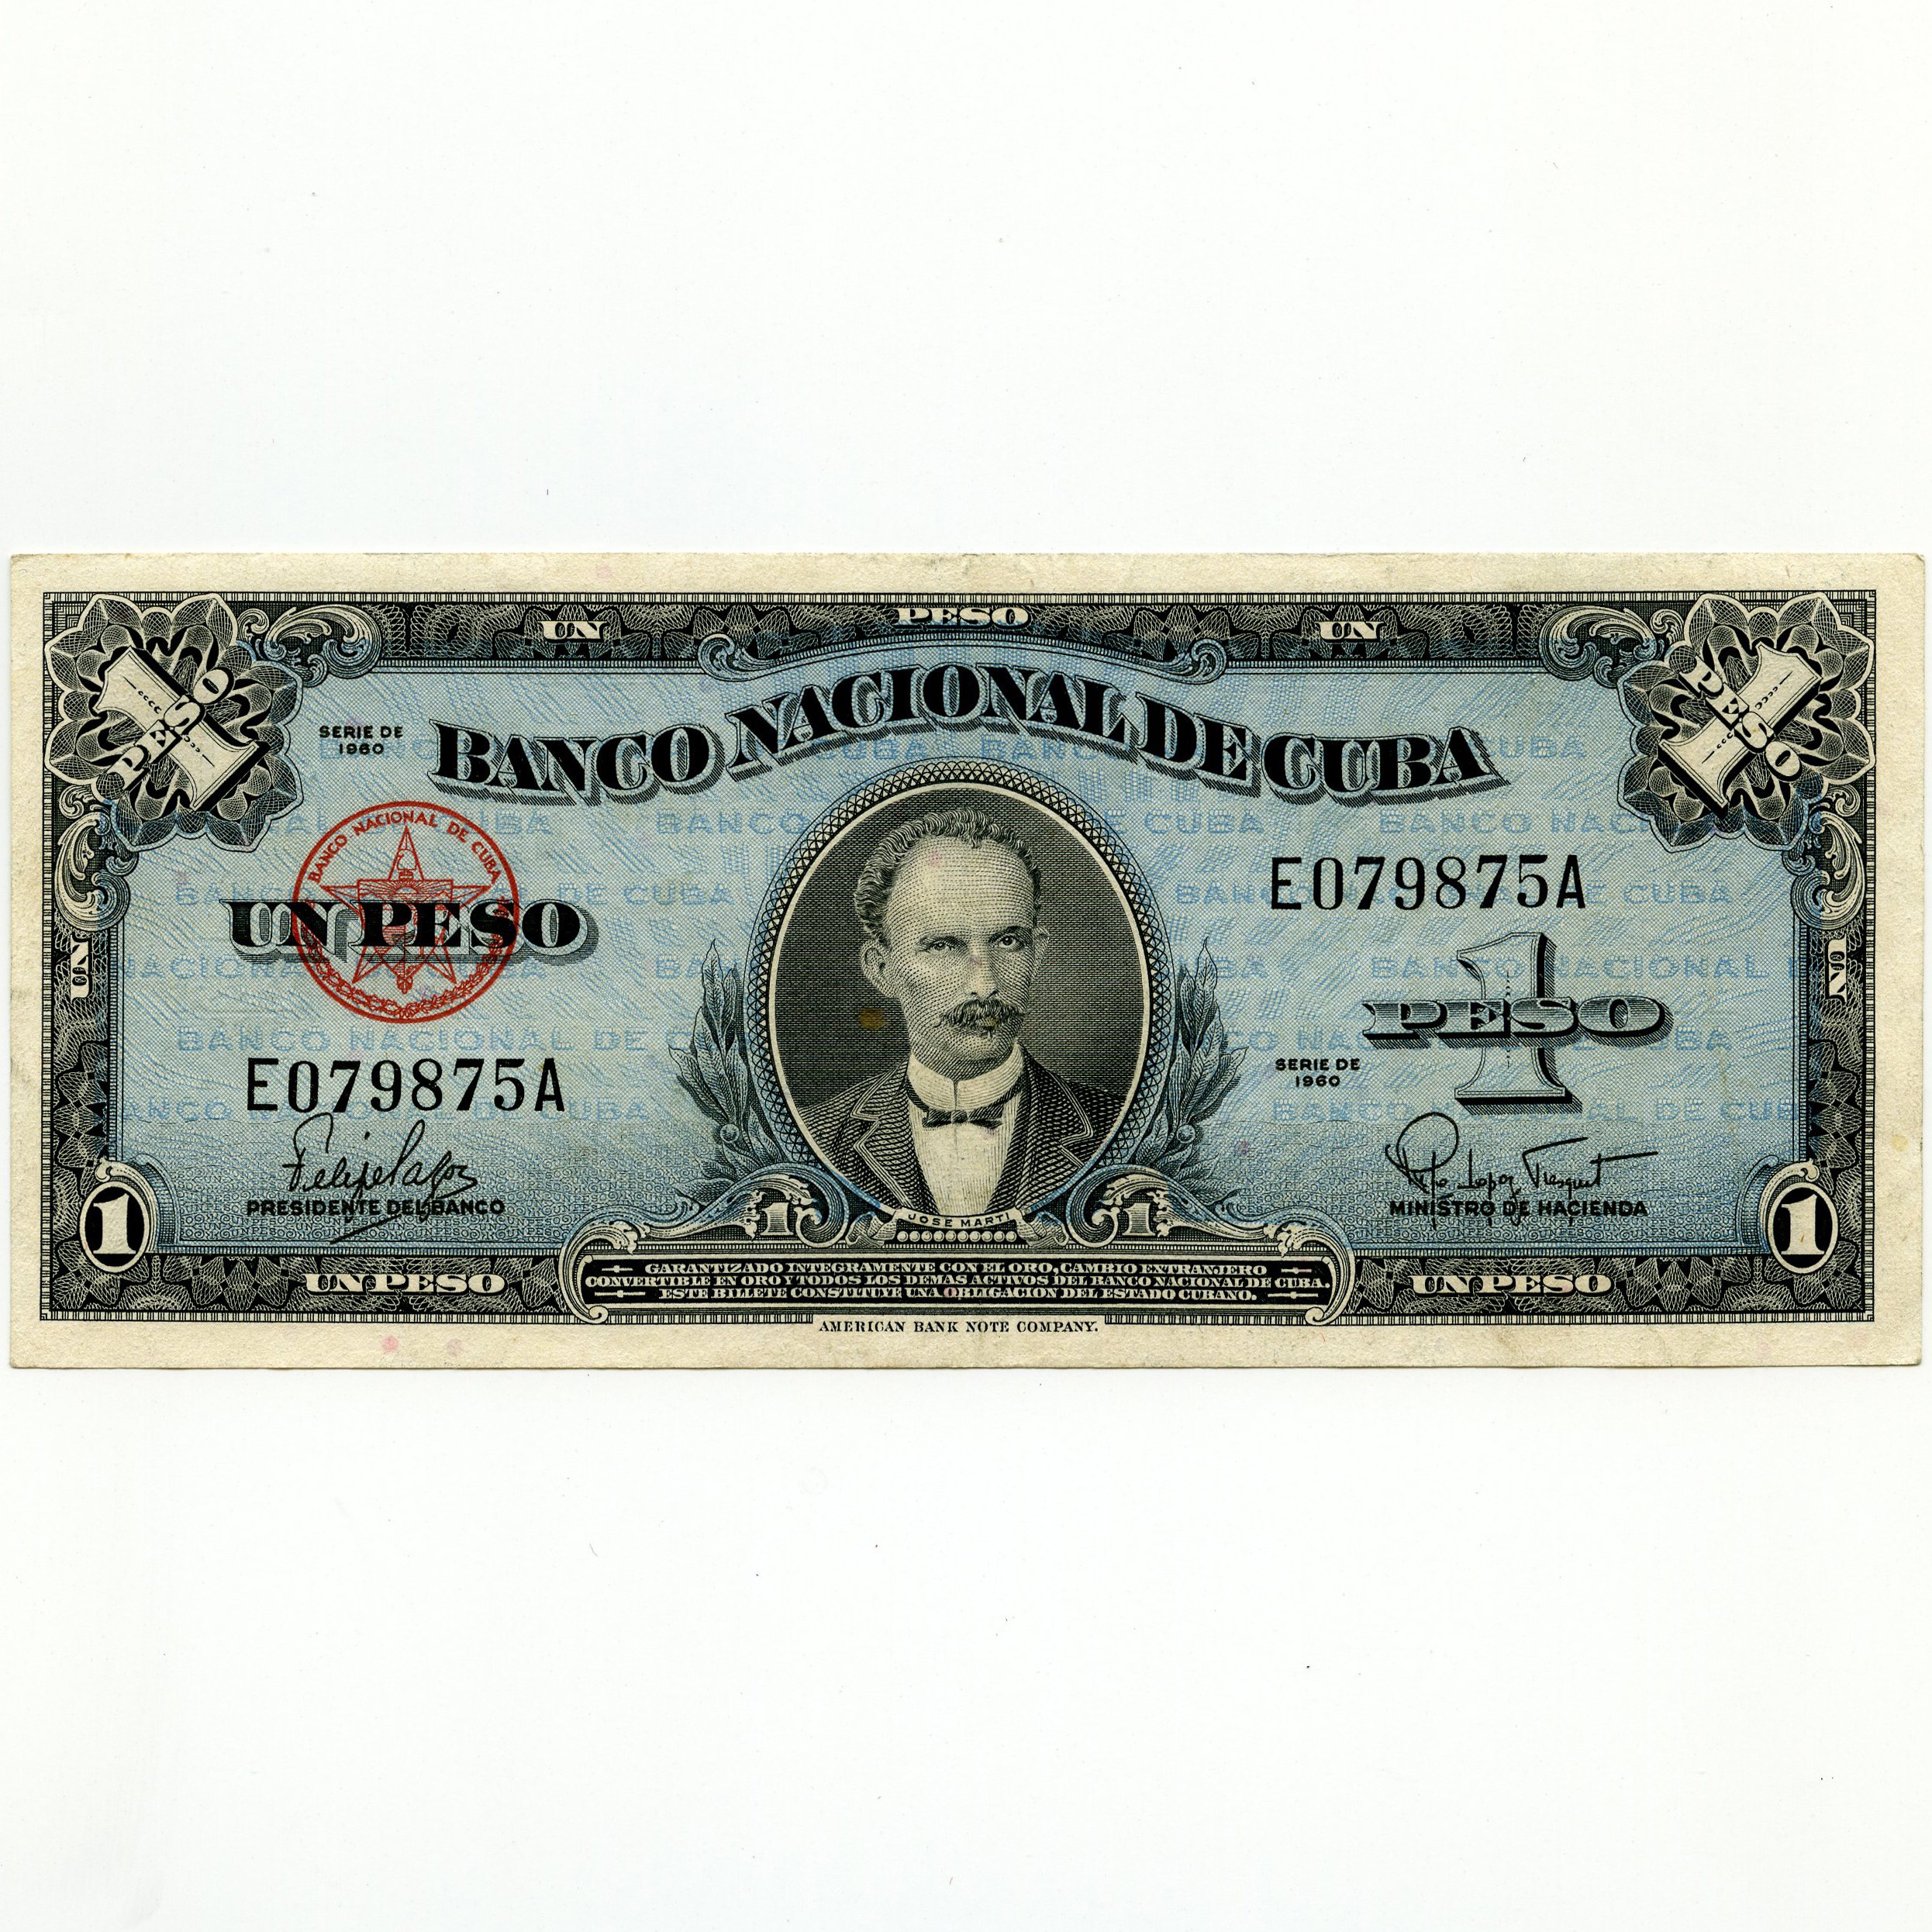 Cuba - 1 Peso - E079875A avers